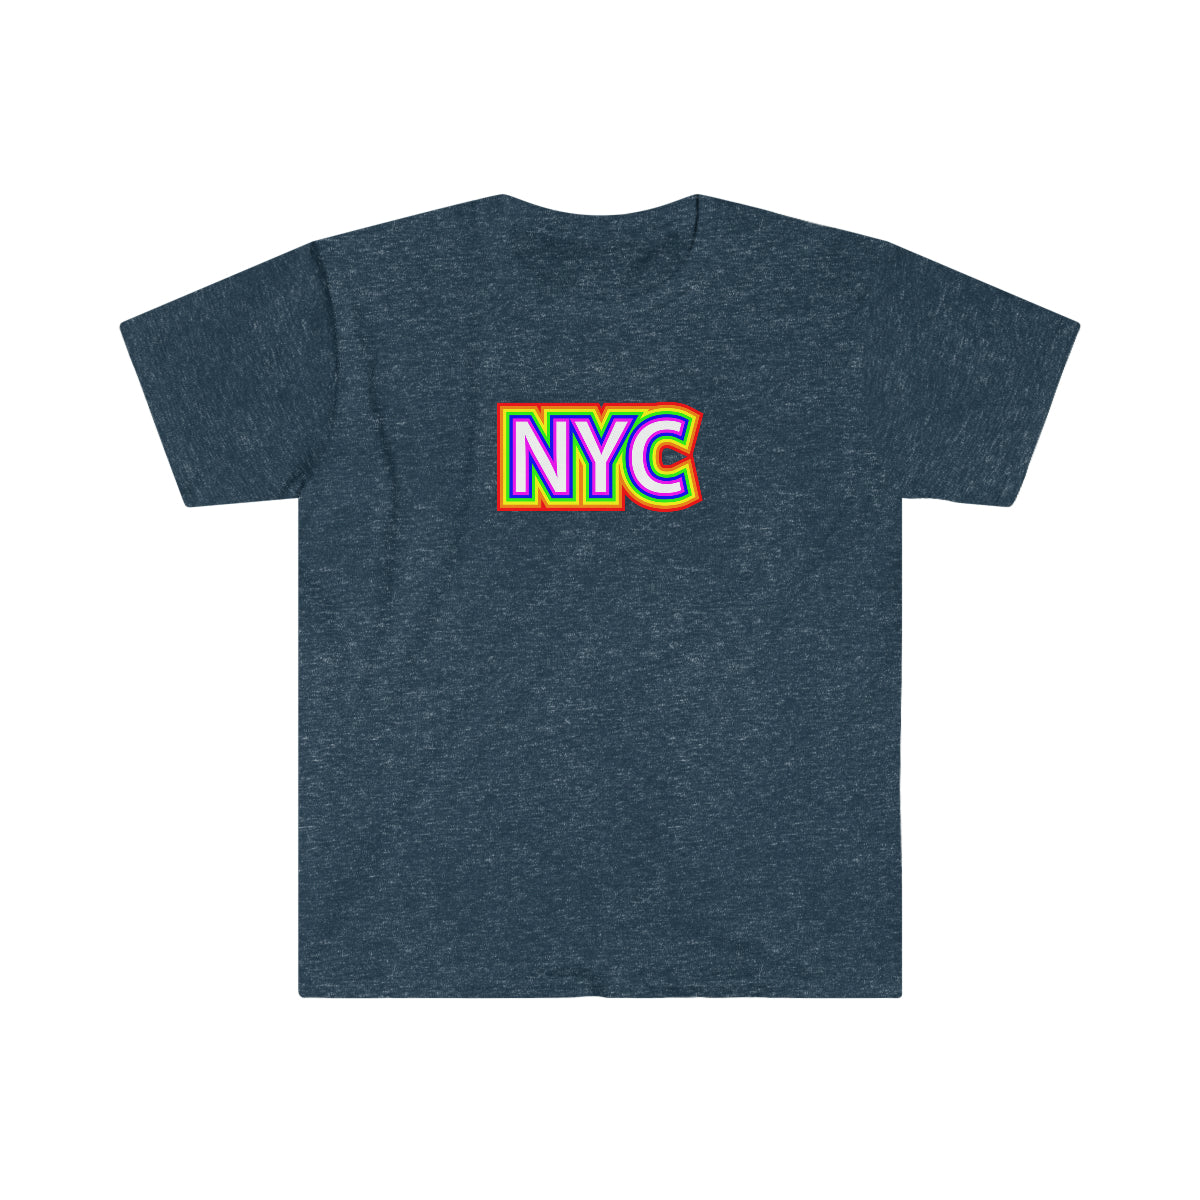 NYC Rainbow Pride Softstyle T-Shirt - New York City